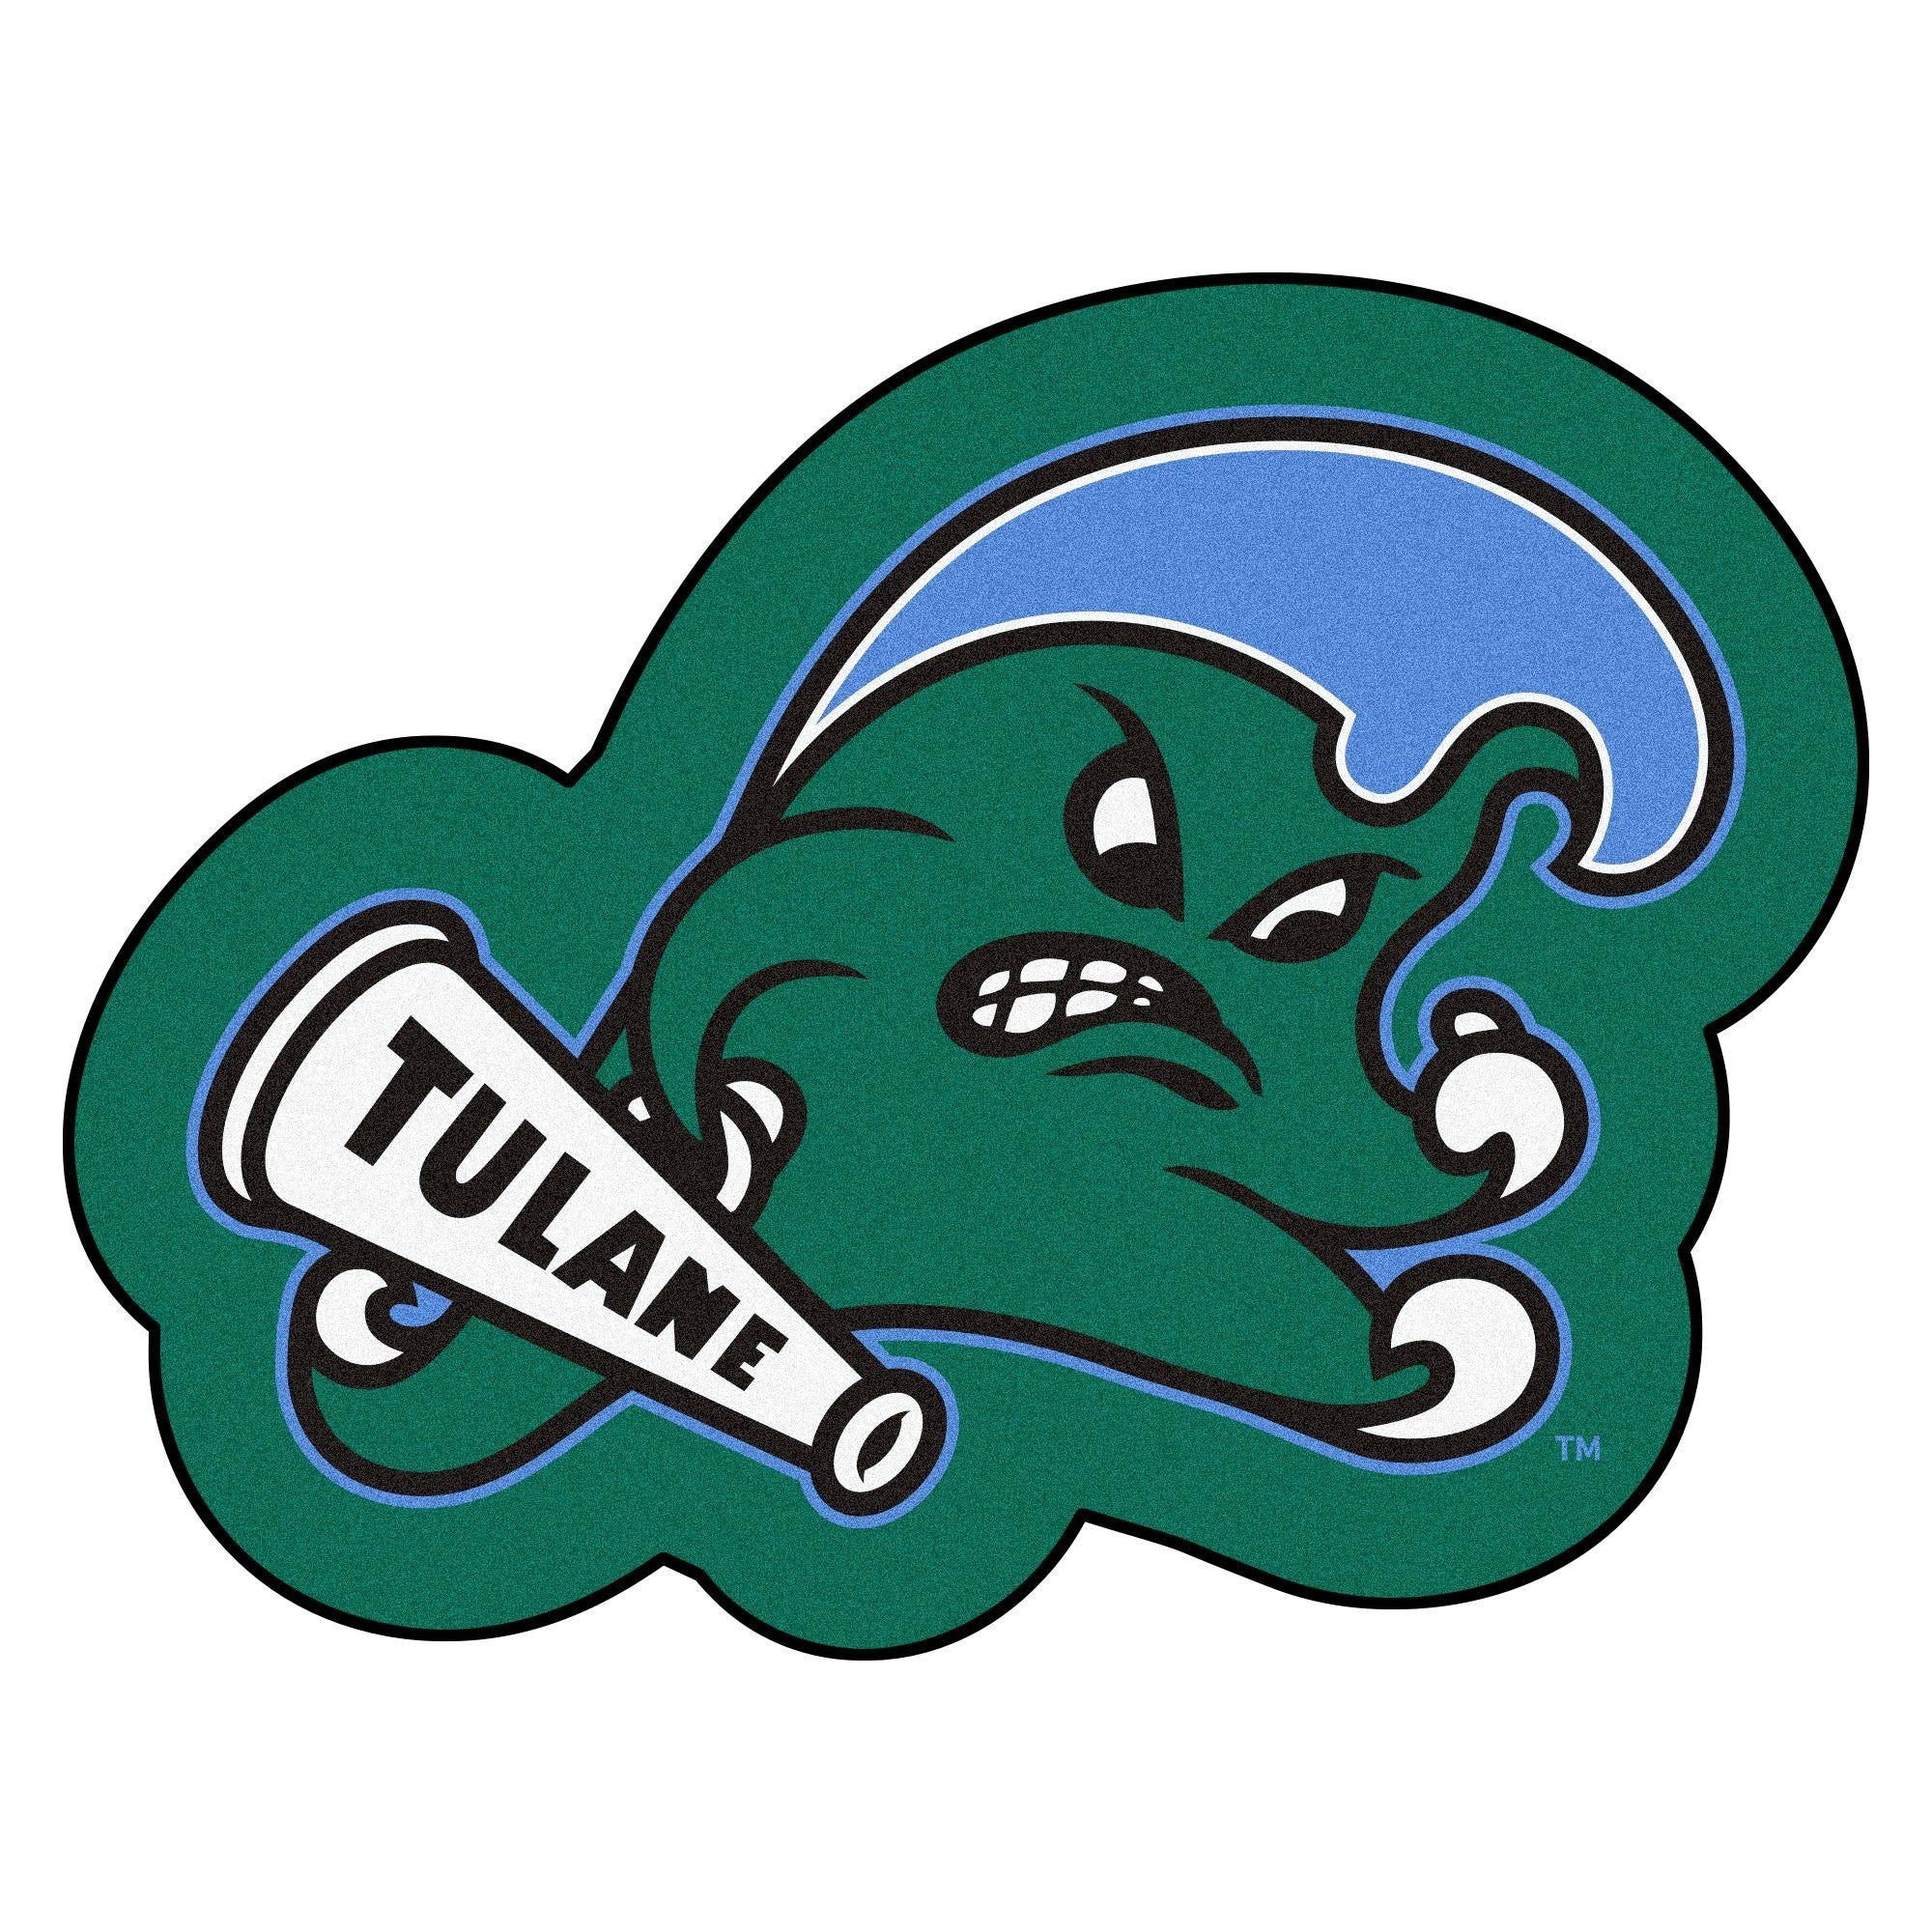 Tulane Logo - NCAA Tulane University Green Wave Mascot Novelty Logo Shaped Area Rug - N/A